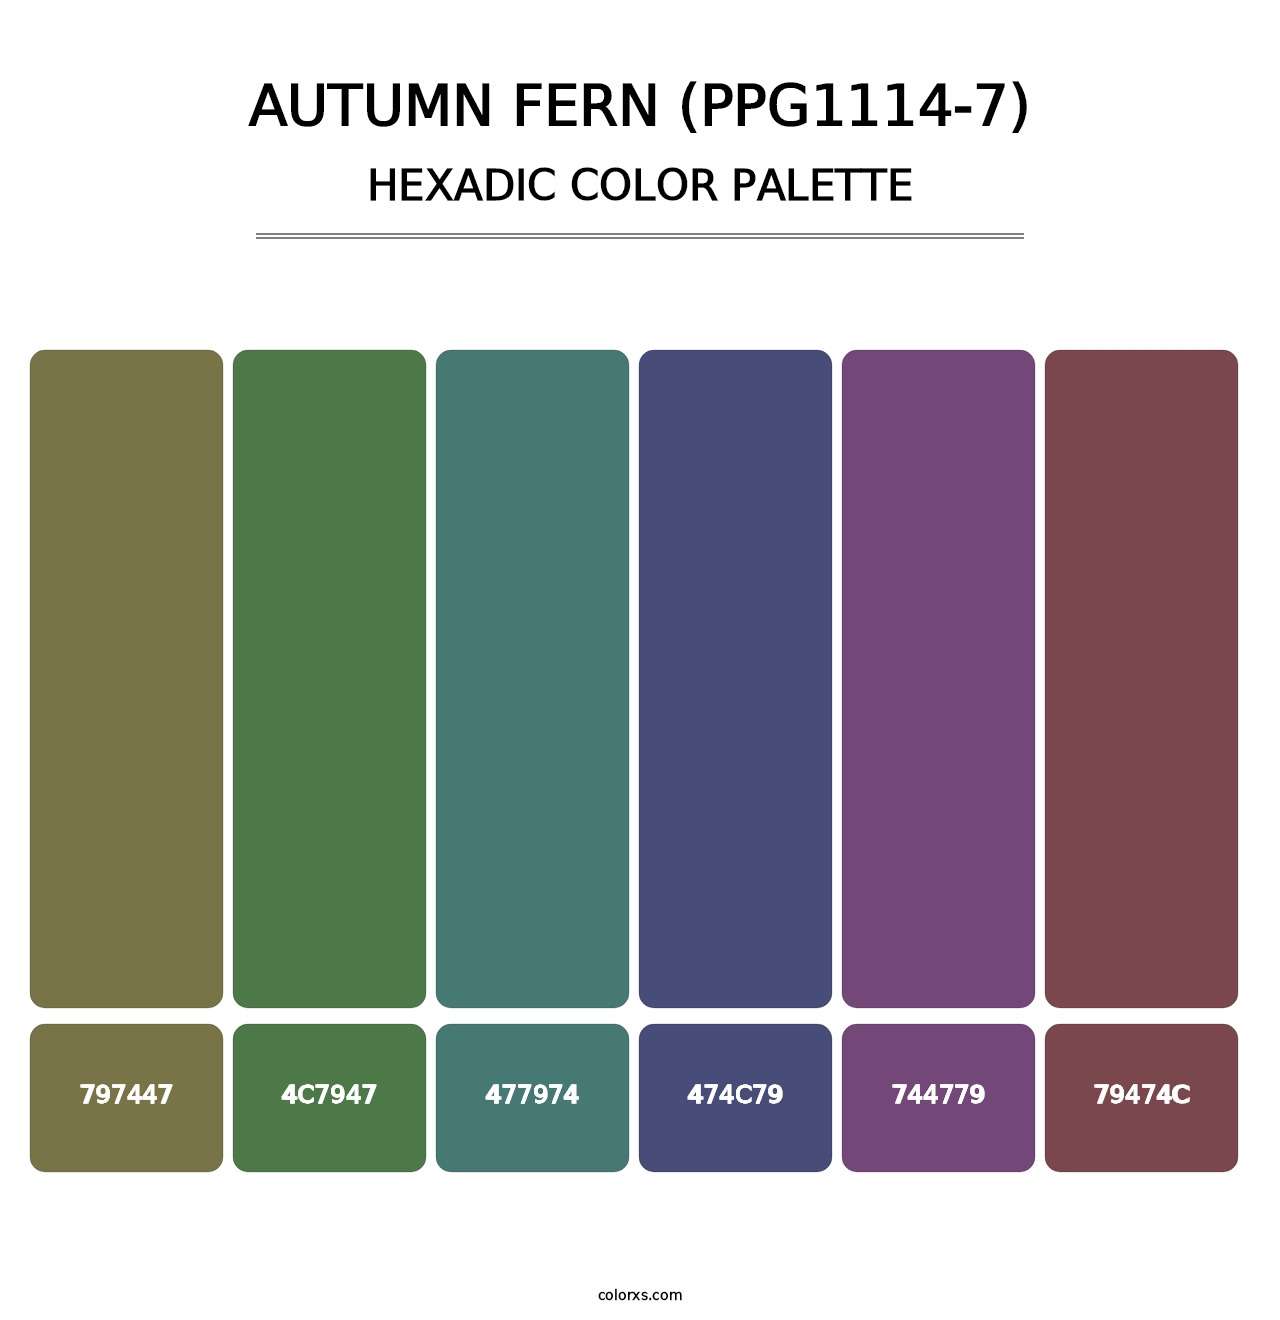 Autumn Fern (PPG1114-7) - Hexadic Color Palette